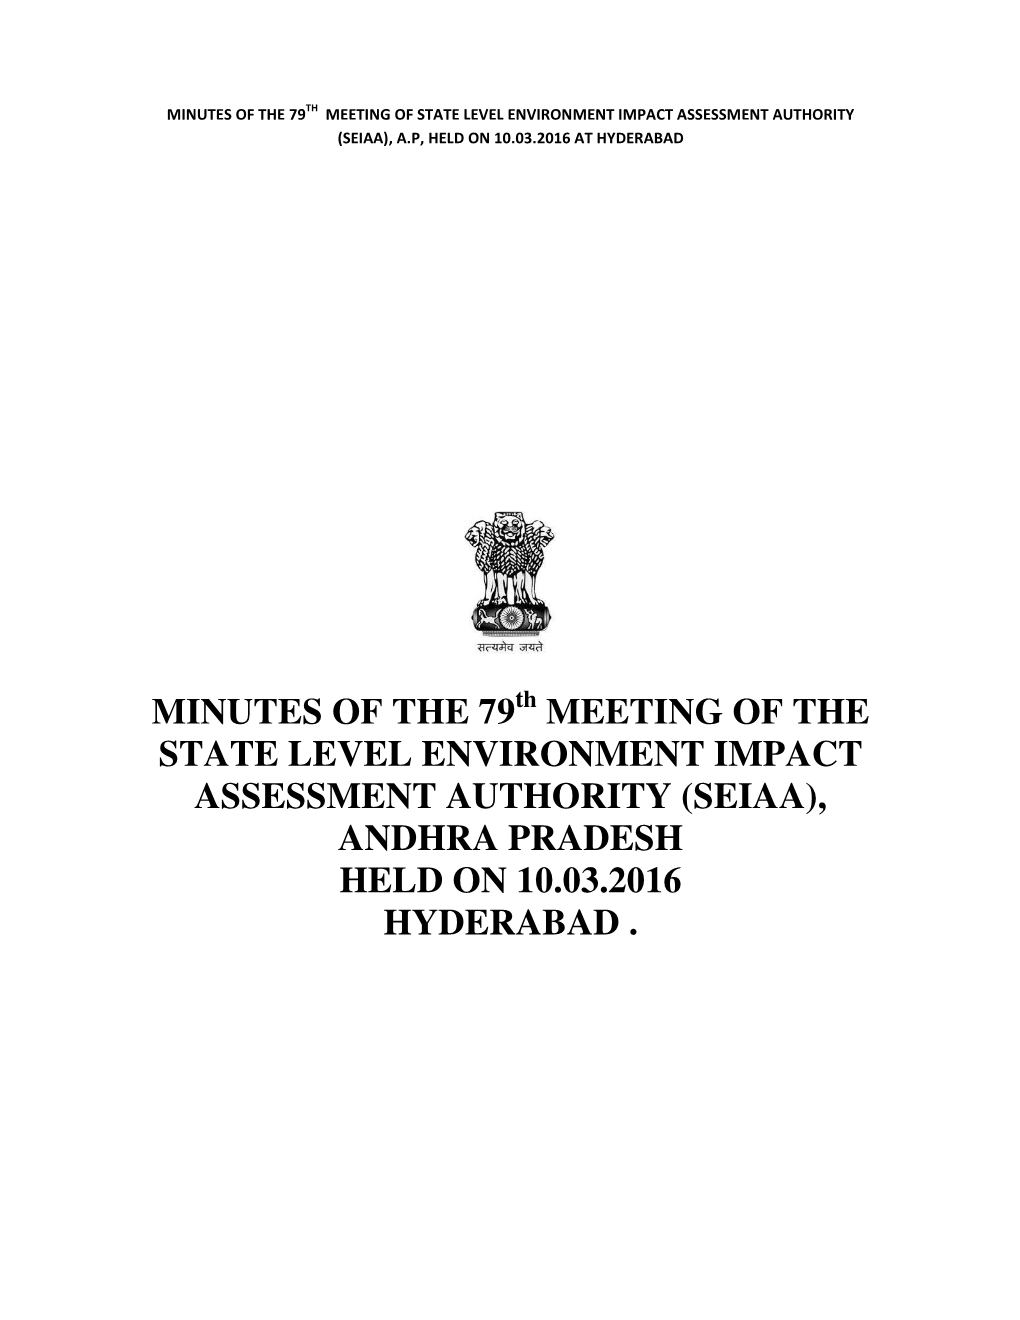 (Seiaa), Andhra Pradesh Held on 10.03.2016 Hyderabad